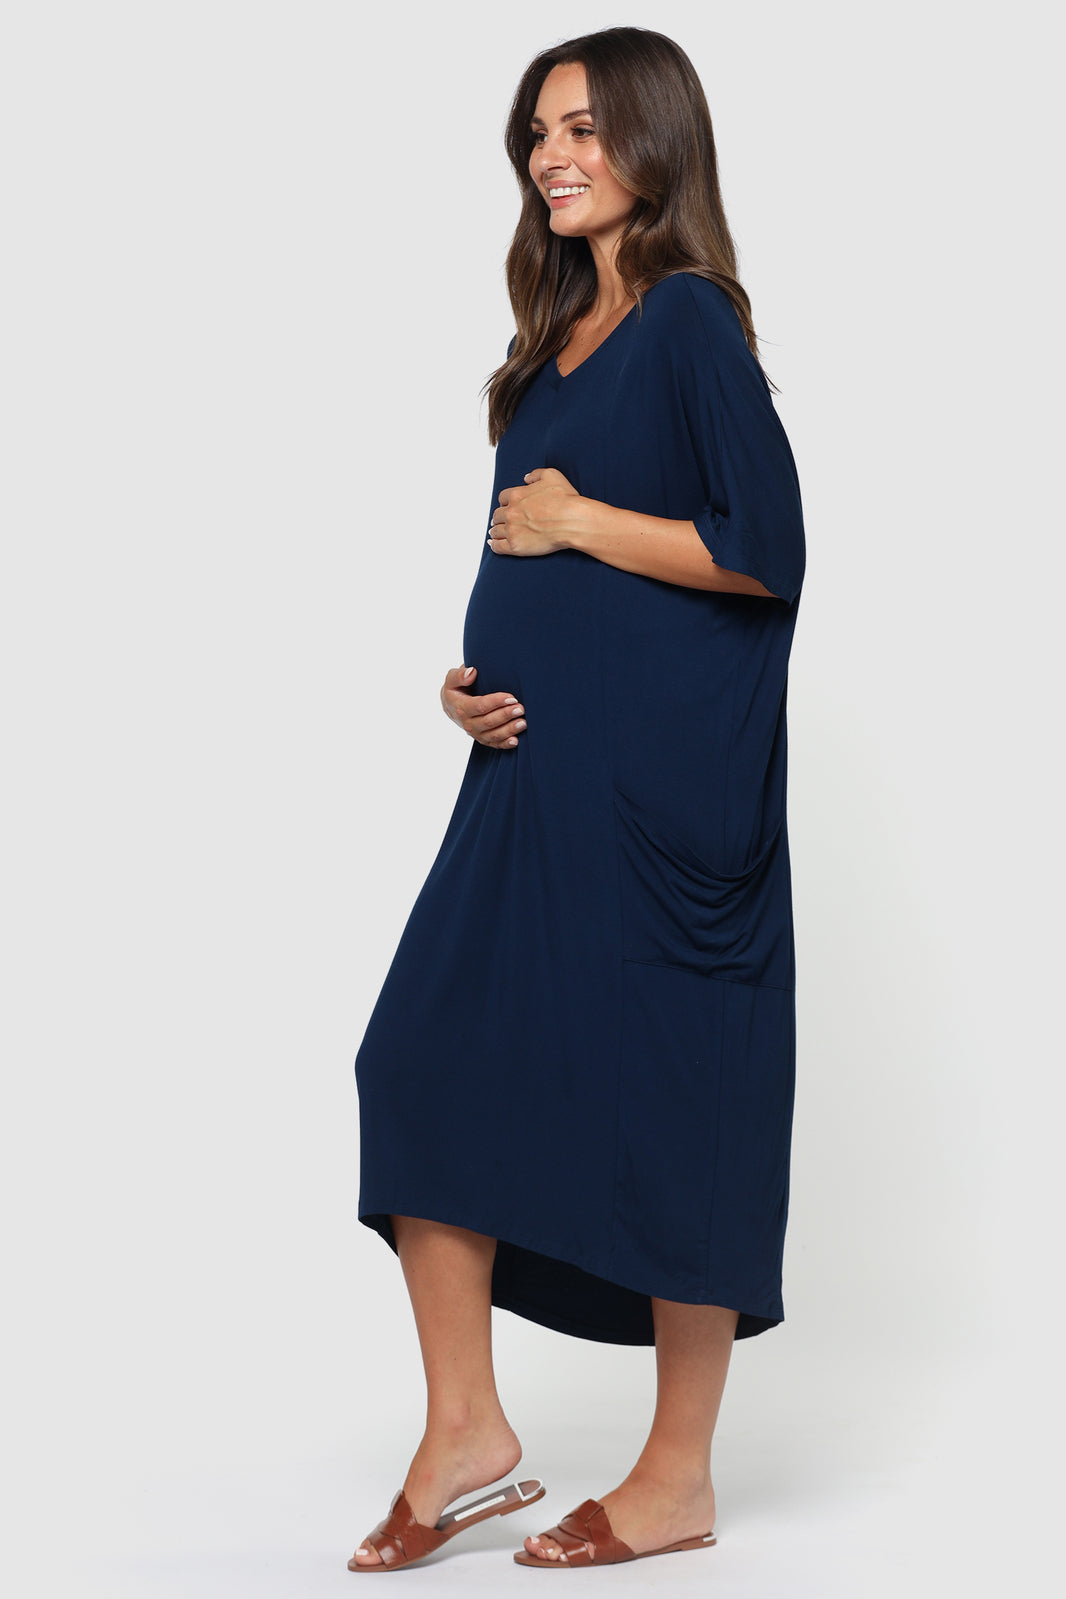 Organic Bamboo Samara Maternity Dress Dress from Bamboo Body maternity online store brisbane sydney perth australia